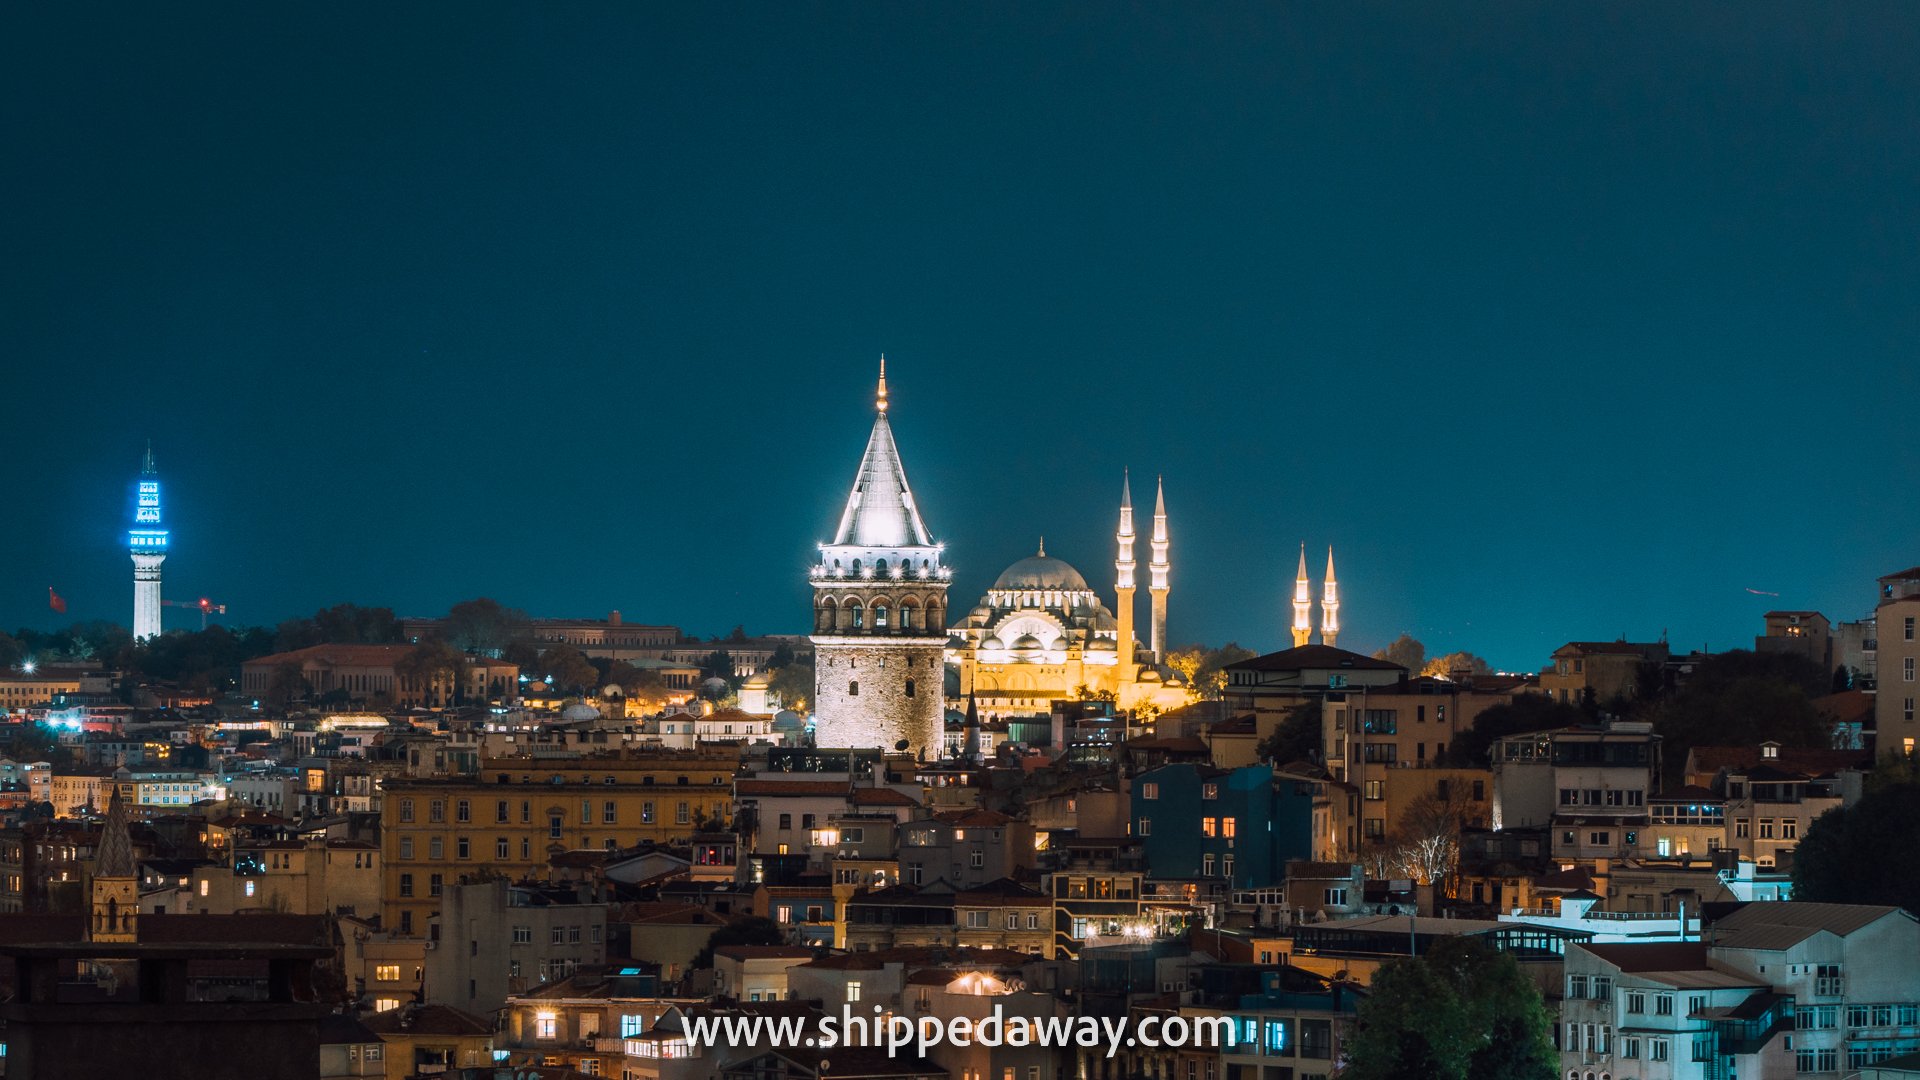 Galata Tower and Suleymaniye Mosque seen at night, Istanbul, Turkey